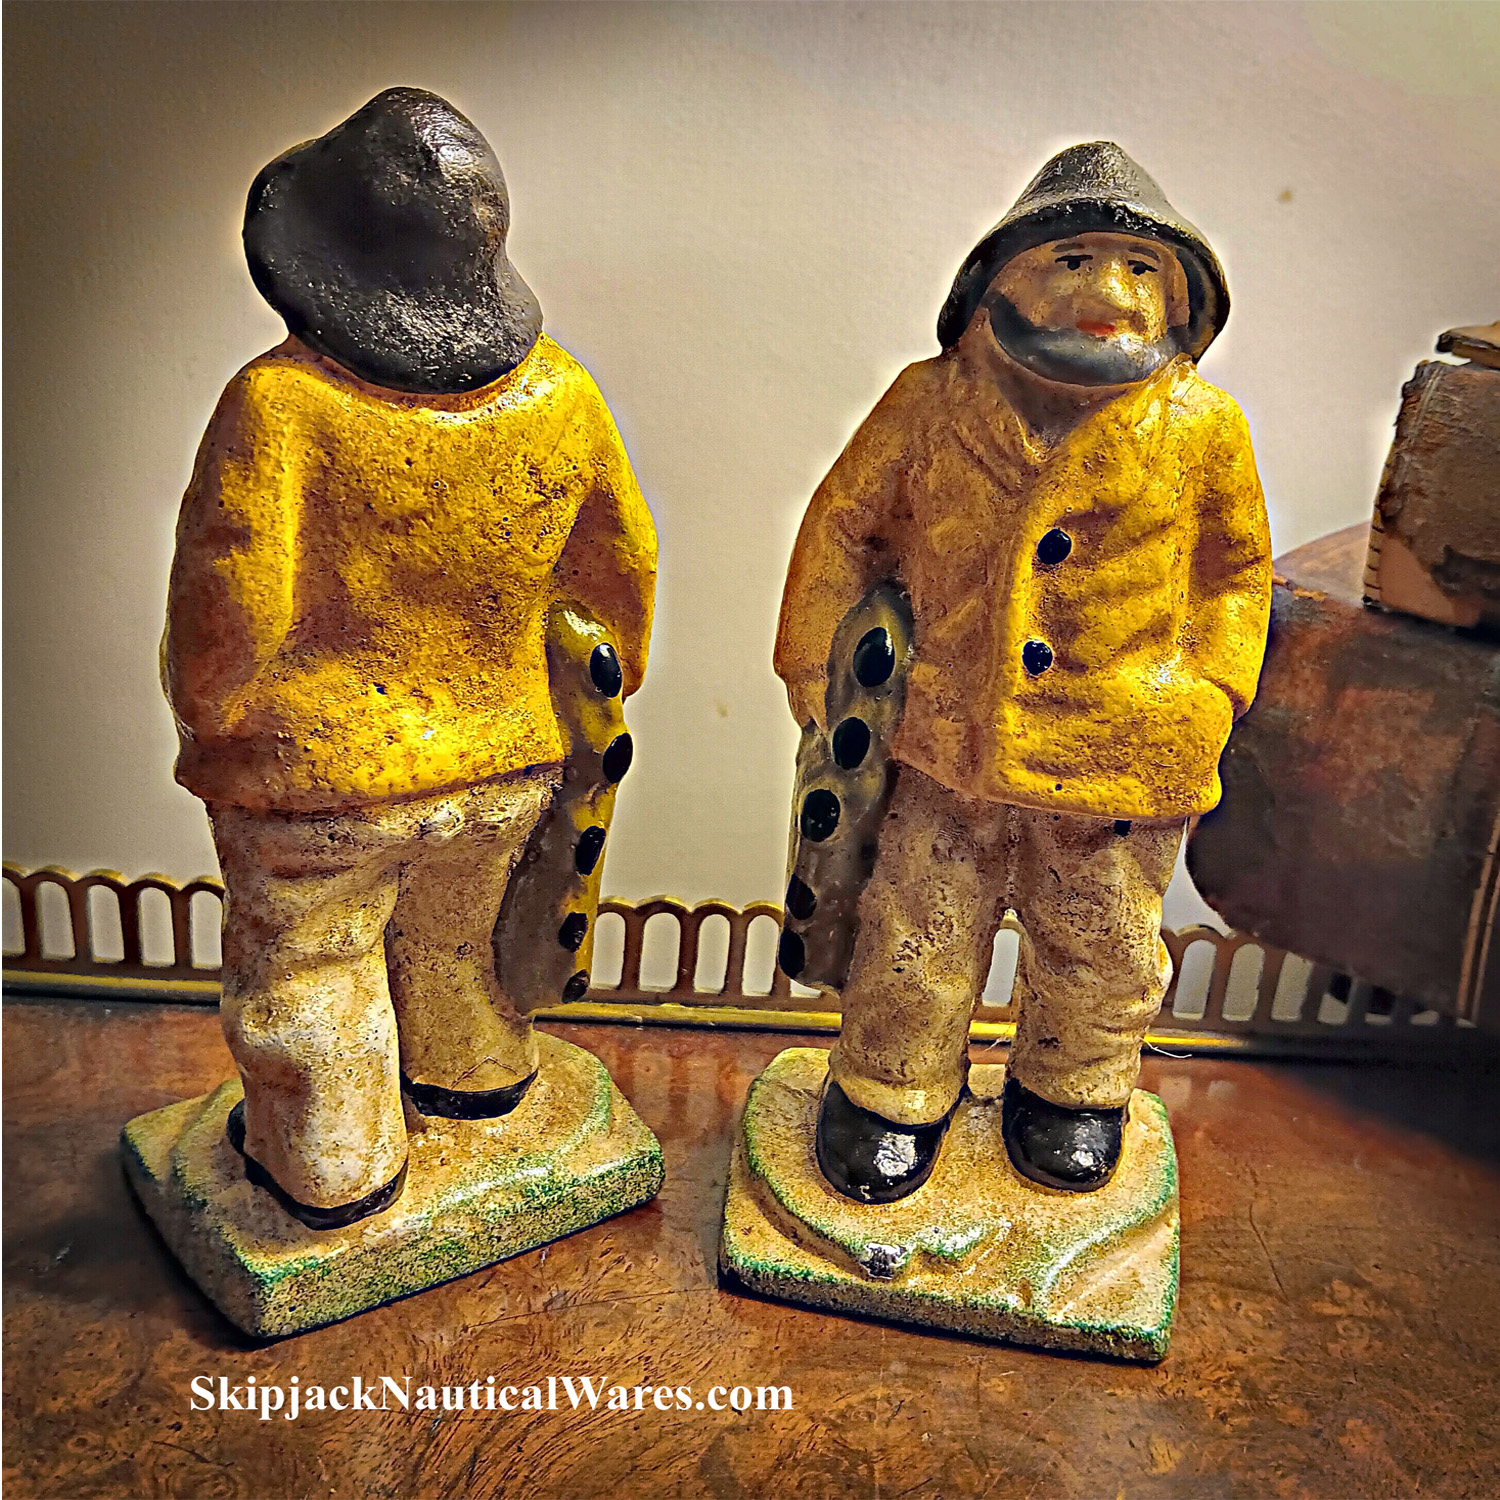 Pair of Old Salt Fishermen Cast Iron Bookends: Skipjack Nautical Wares